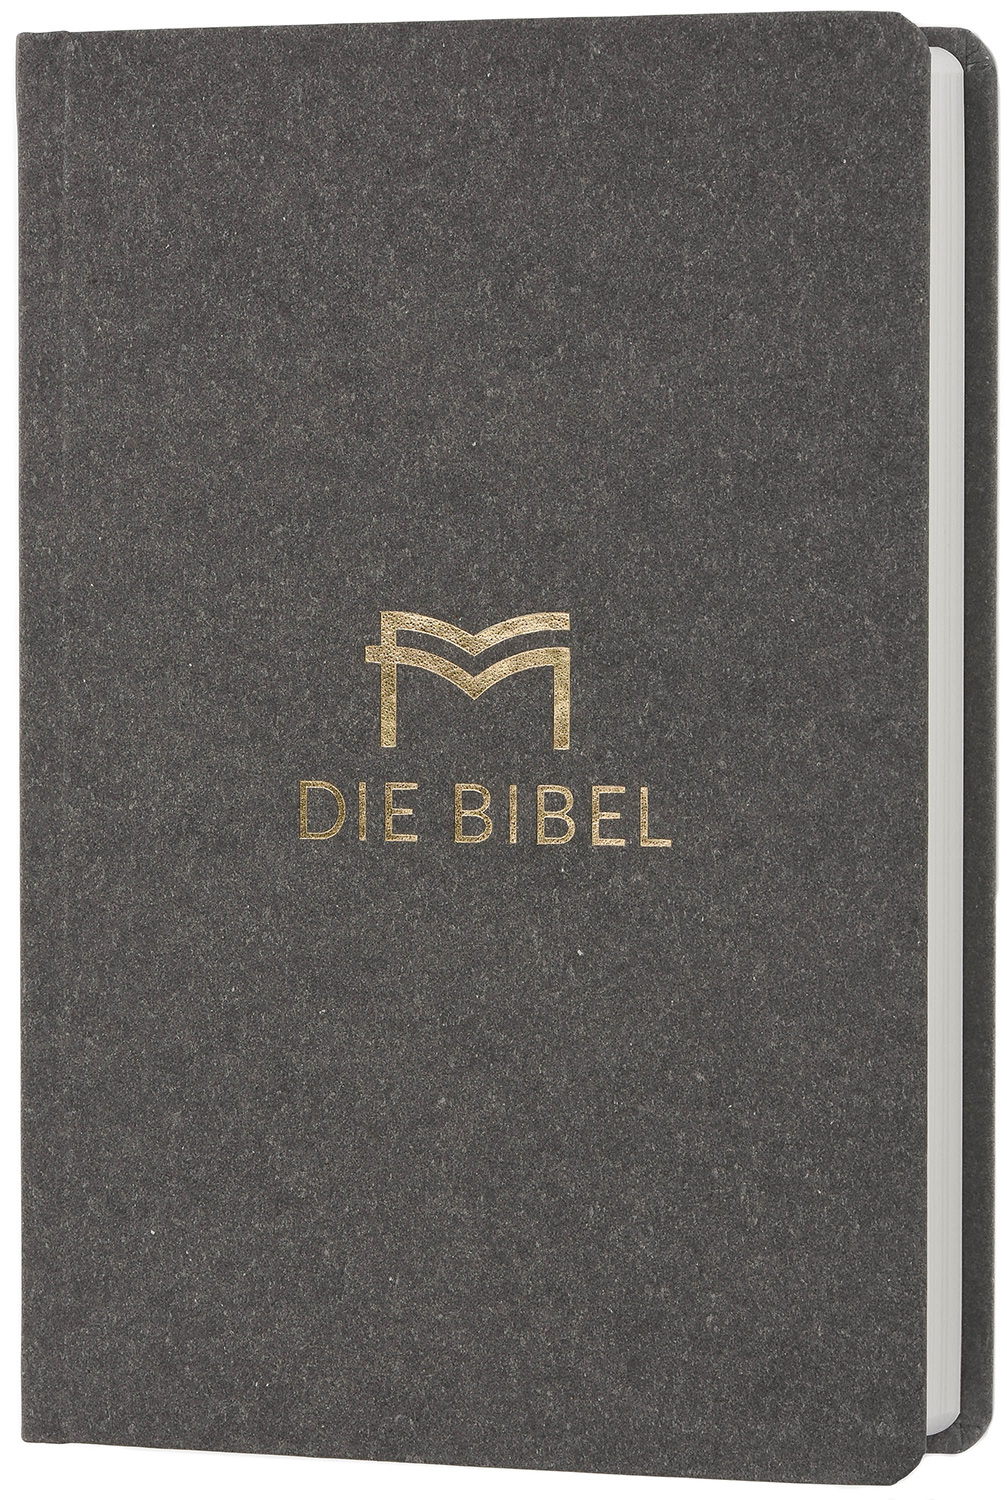 Menge 2020 (Bibel) – Standardausgabe (Hardcover, grau)